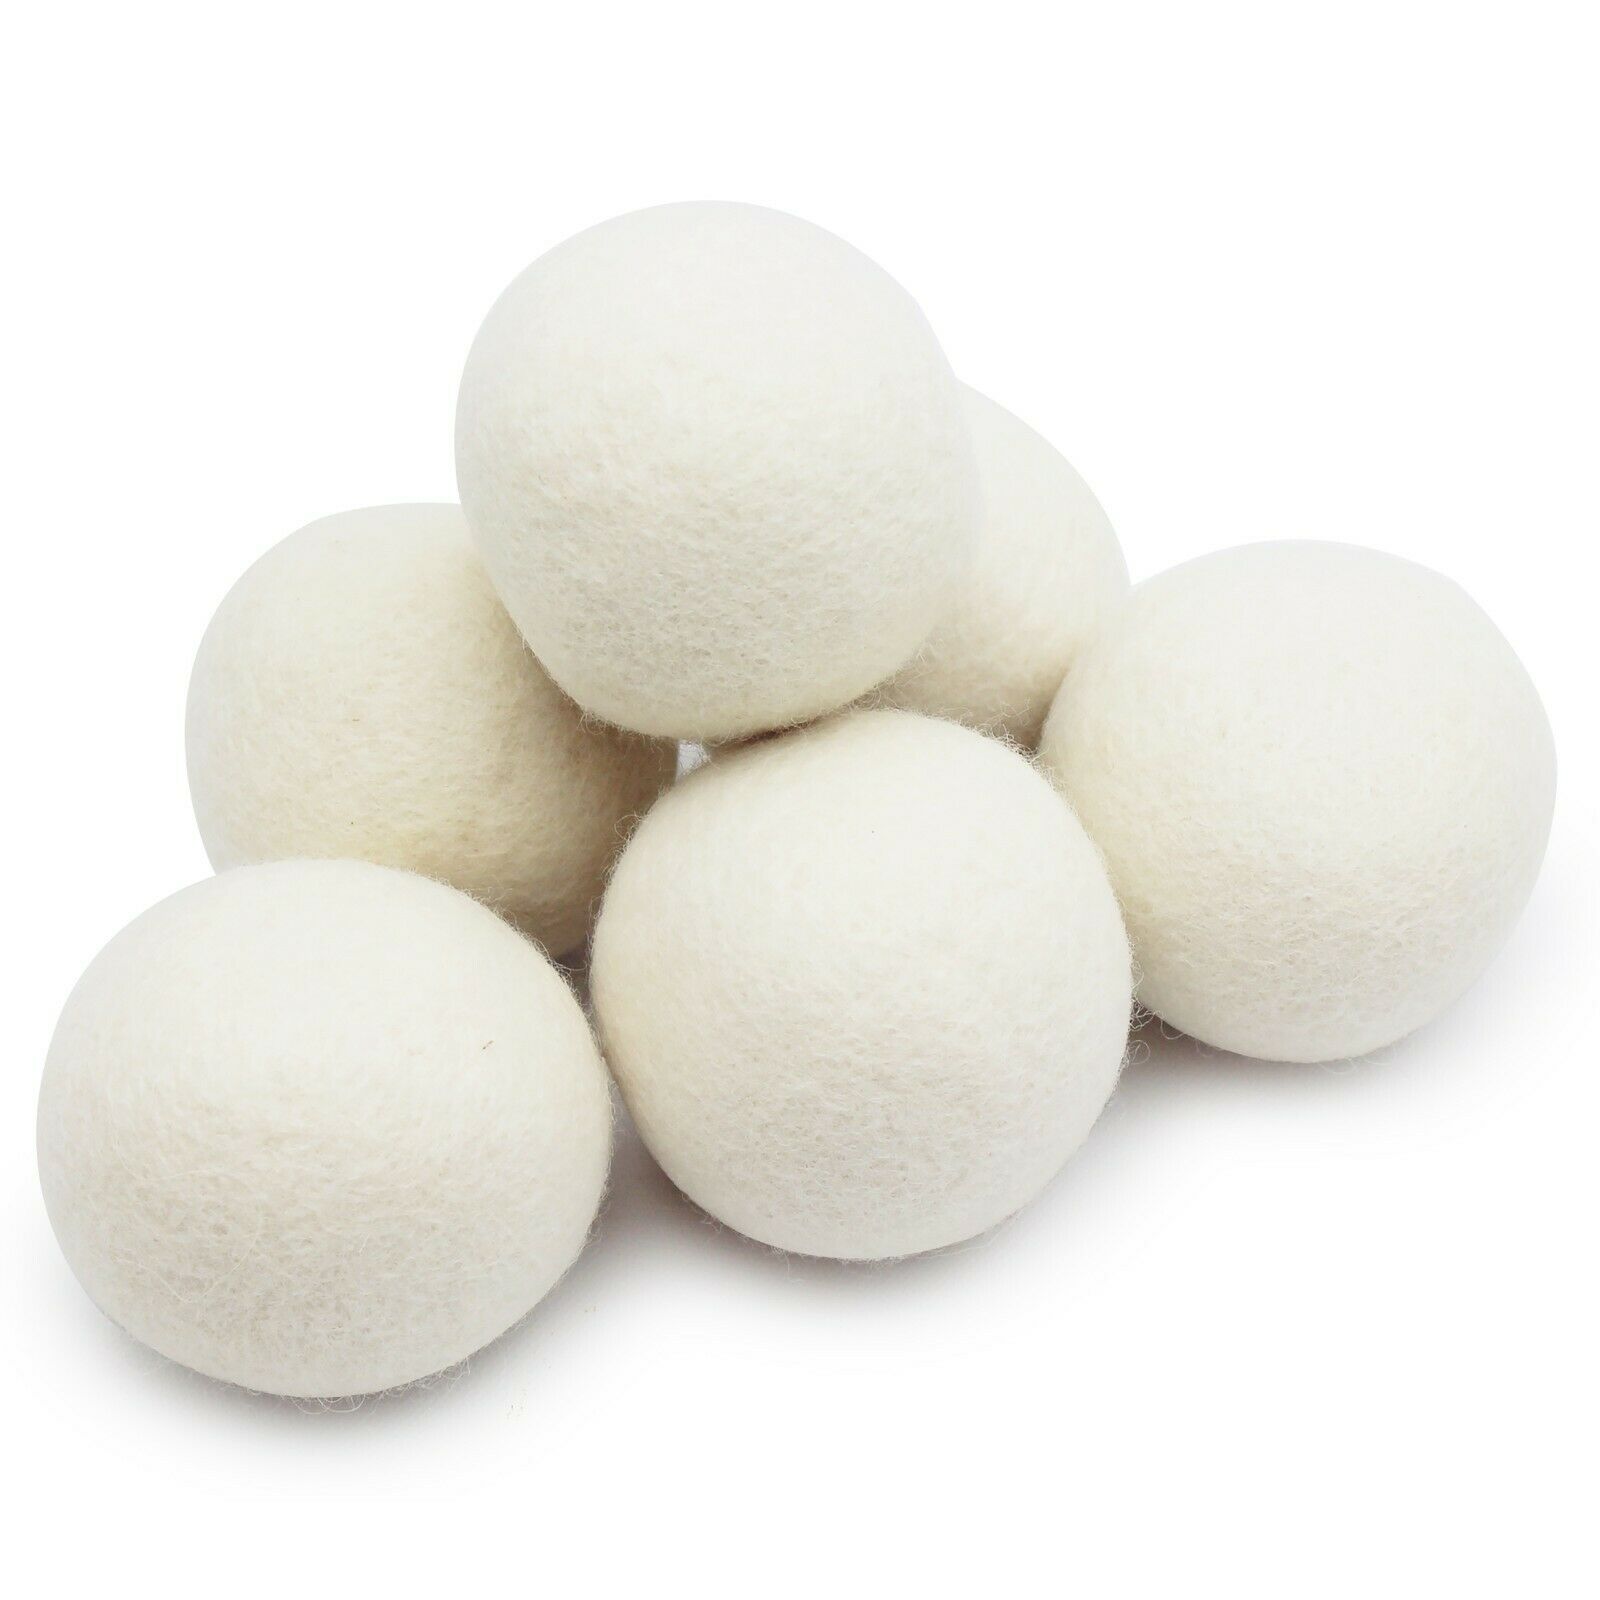 Xl 6 Pack Ecojeannie Wool Dryer Balls - 100% Virgin New Zealand Wool, Min 3" 58g